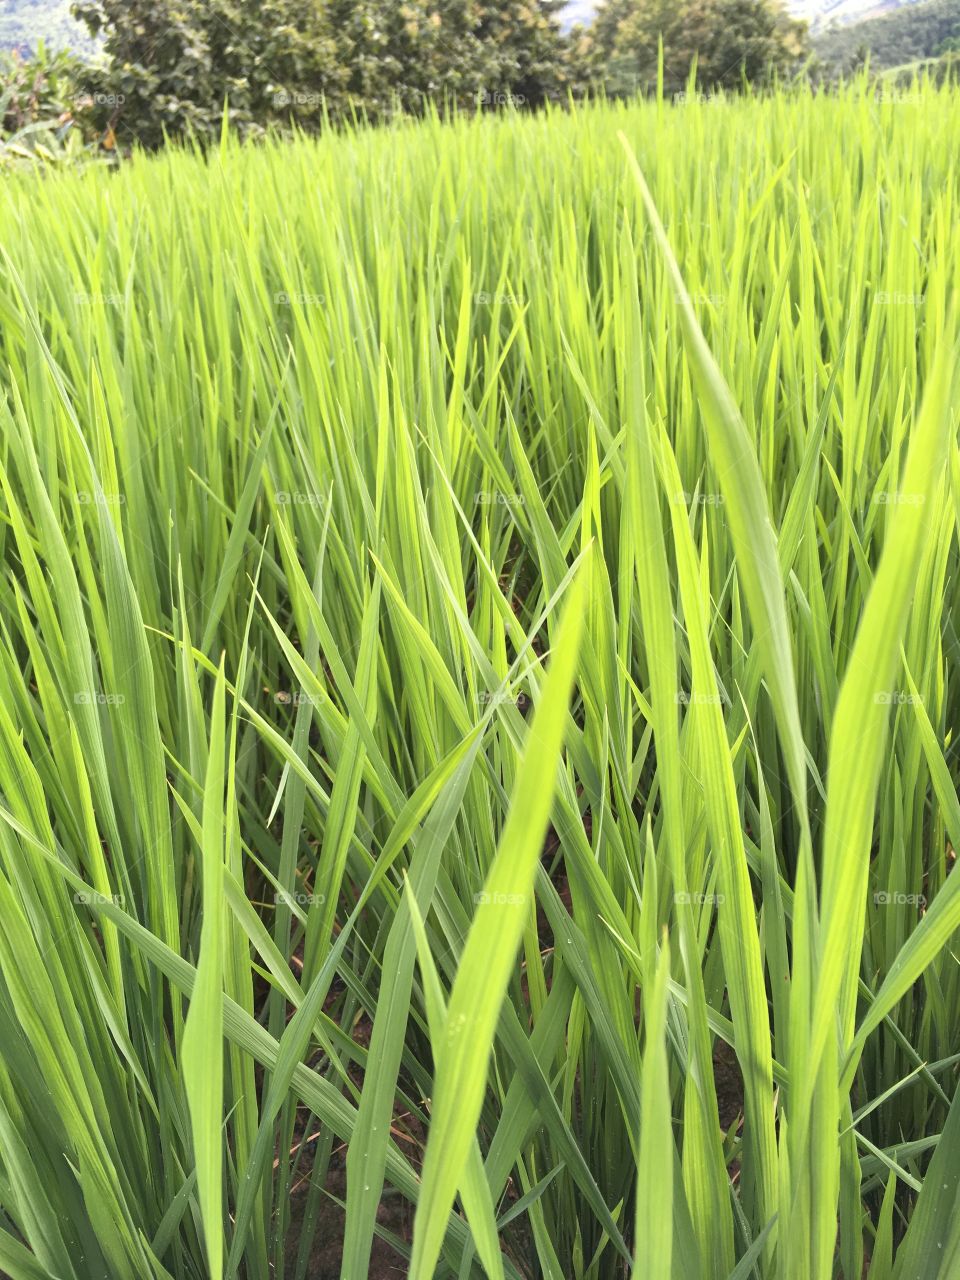 Natural  green 
Rices 

